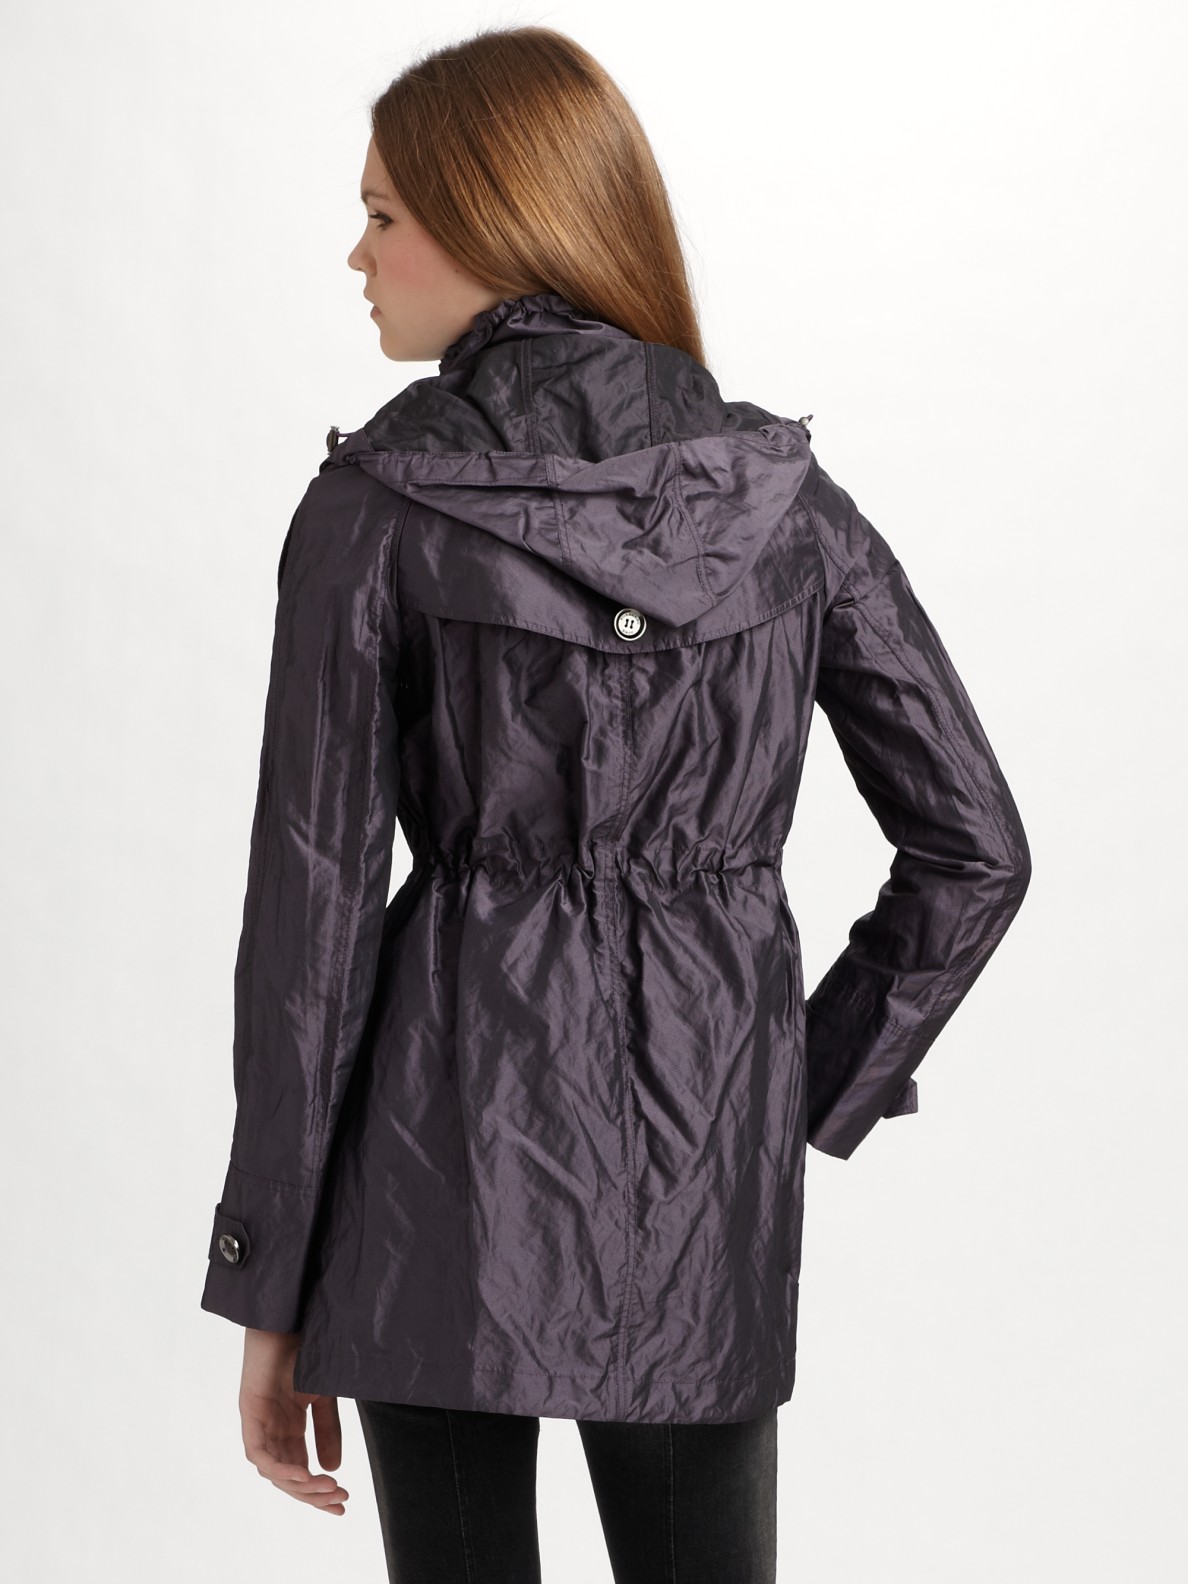 burberry raincoats with hoods